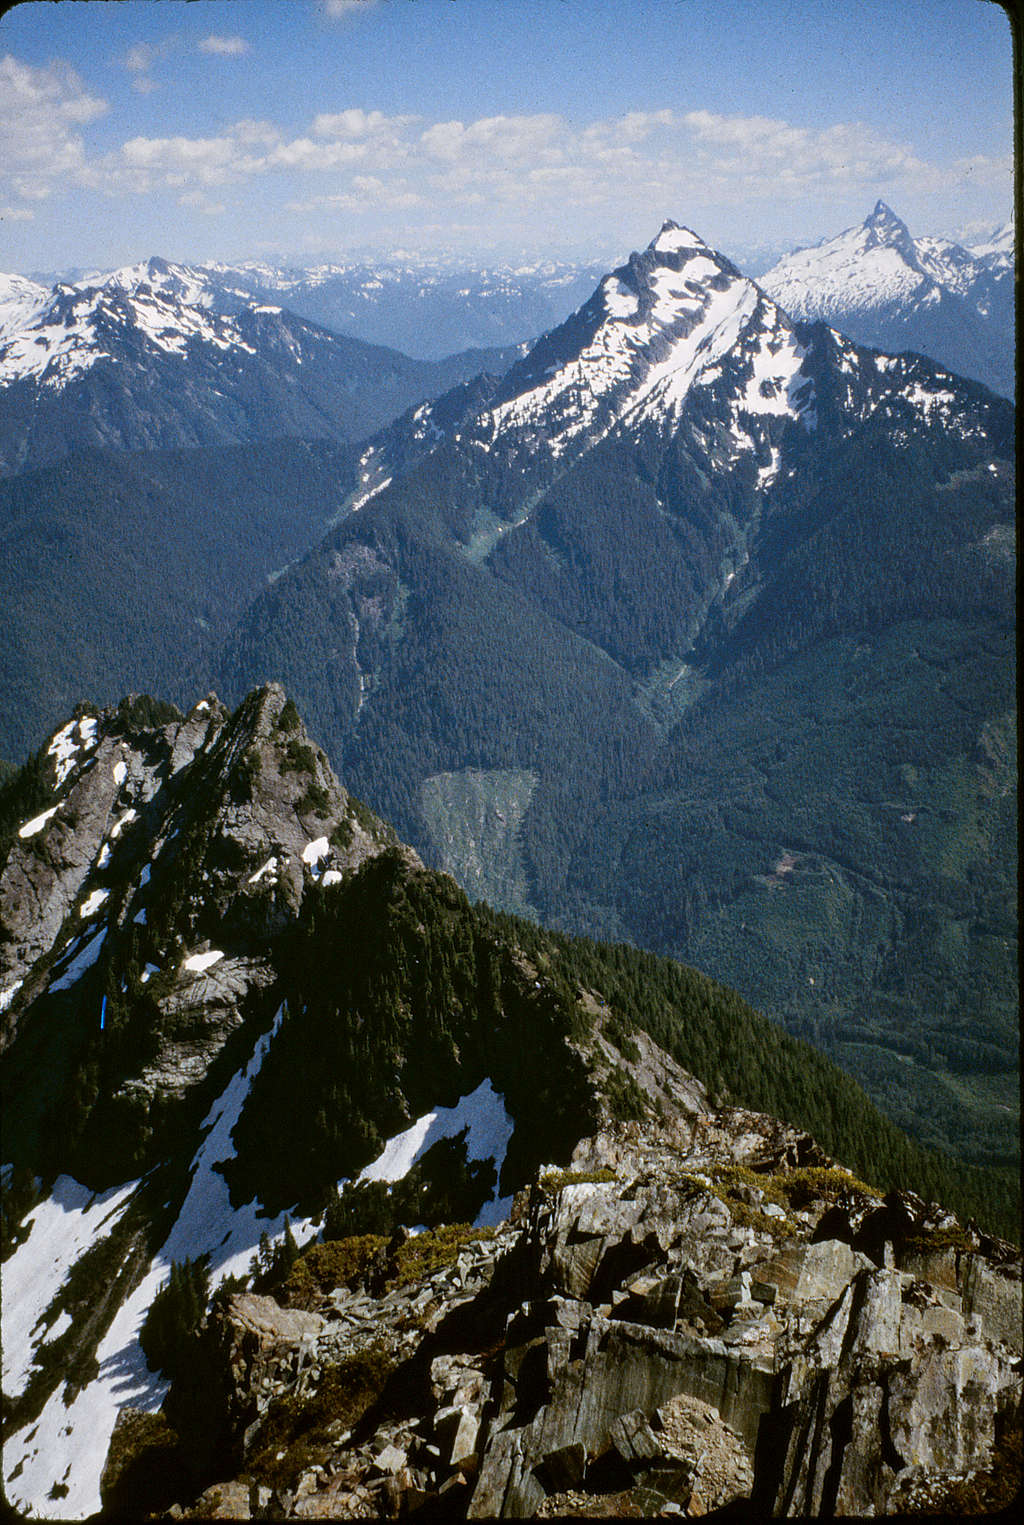 Summit view, toward Mt. Pugh and Sloan Peak